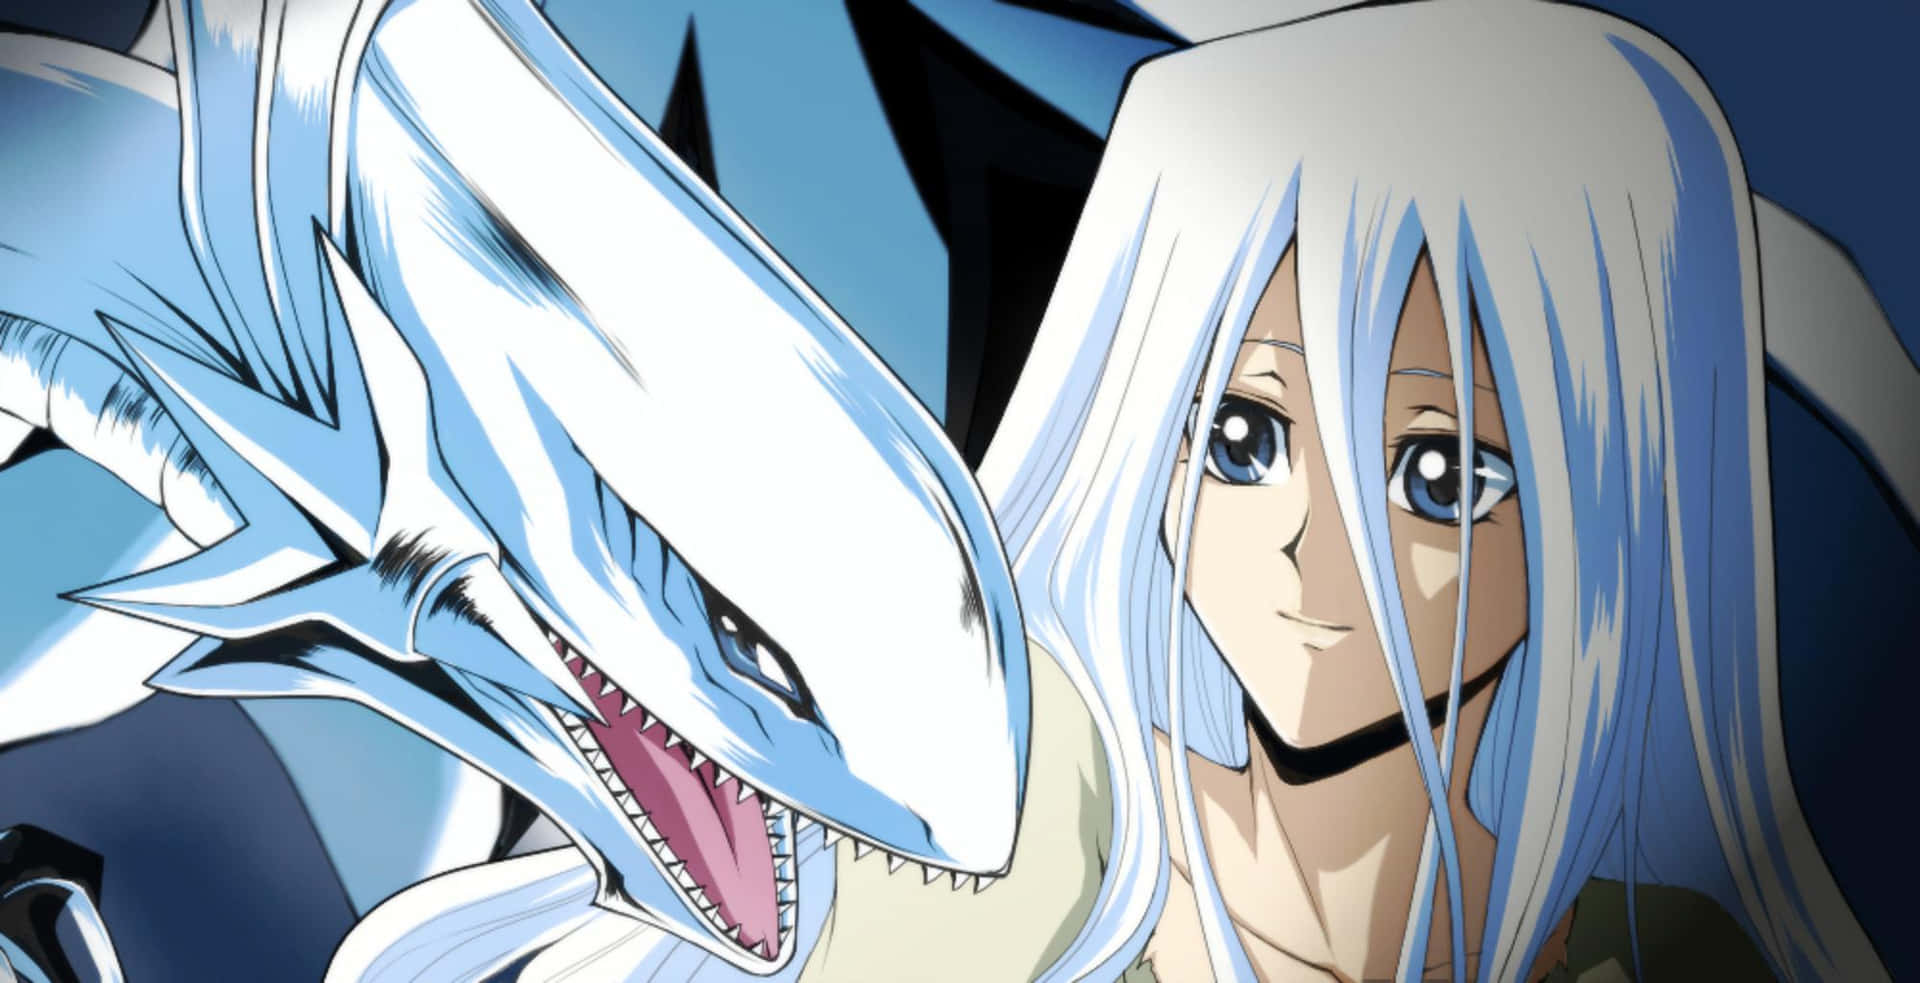 kija, the white dragon. | Anime akatsuki, Anime, Akatsuki